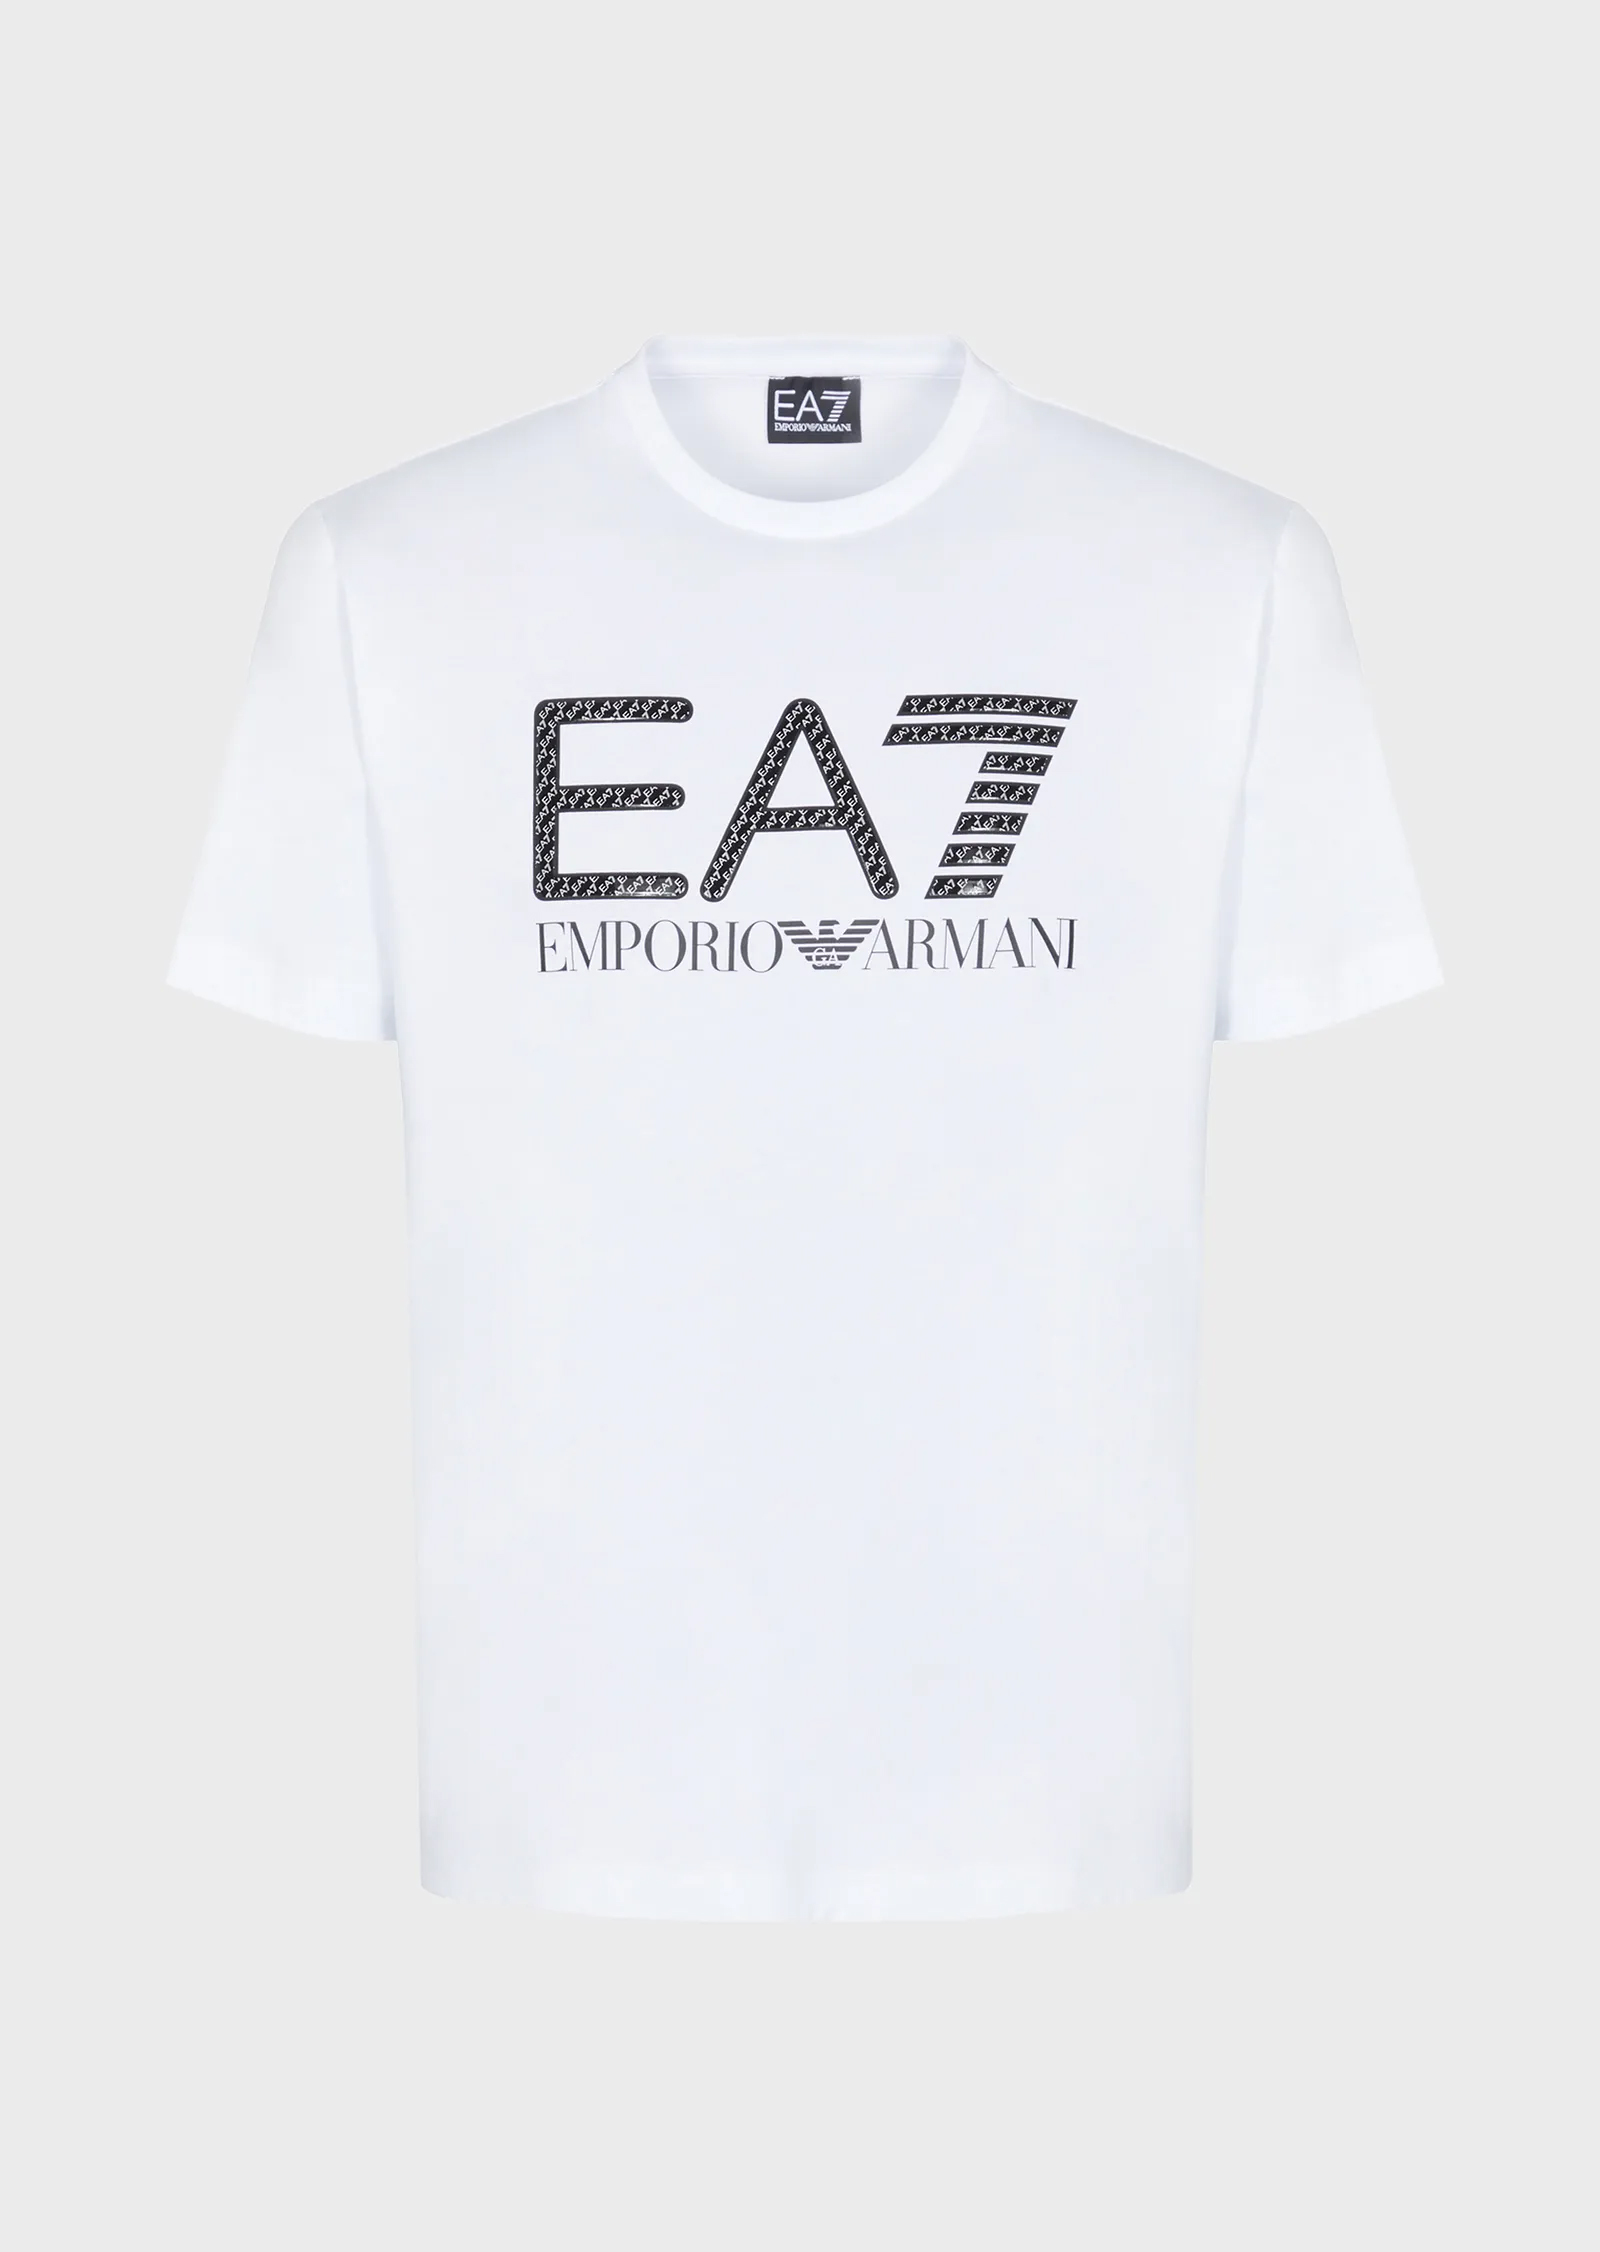 EA7 TShirt Uomo Maxi Logo Regular Bianco